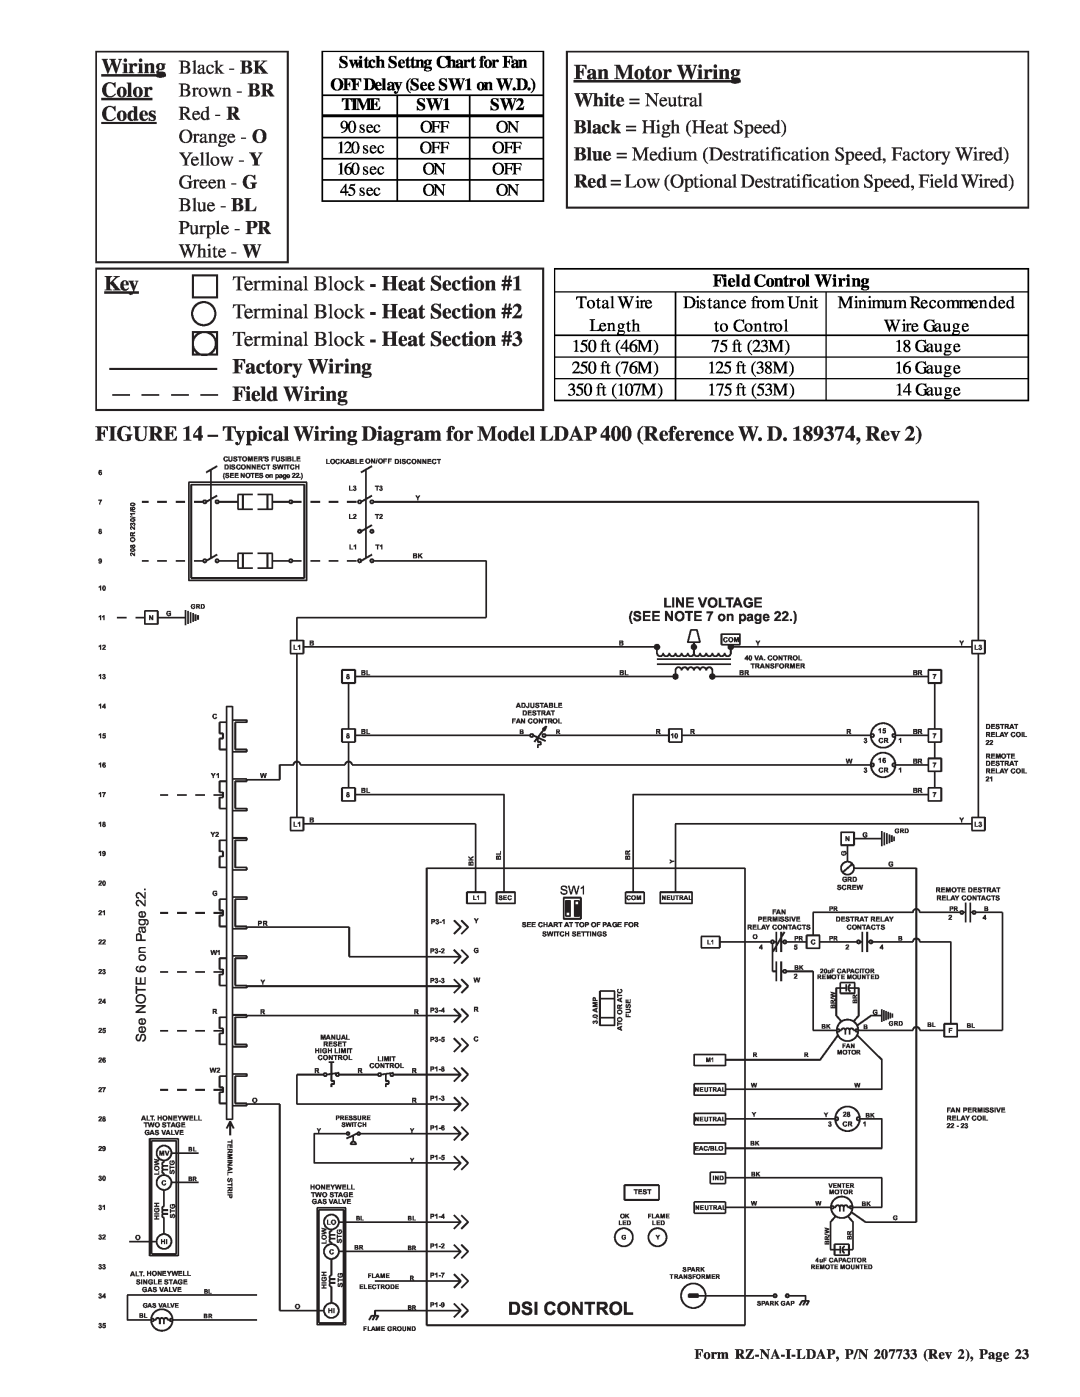 Thomas & Betts LDAP 1200 Fan Motor Wiring, Terminal Block - Heat Section #1, Terminal Block - Heat Section #2, Dsi Control 